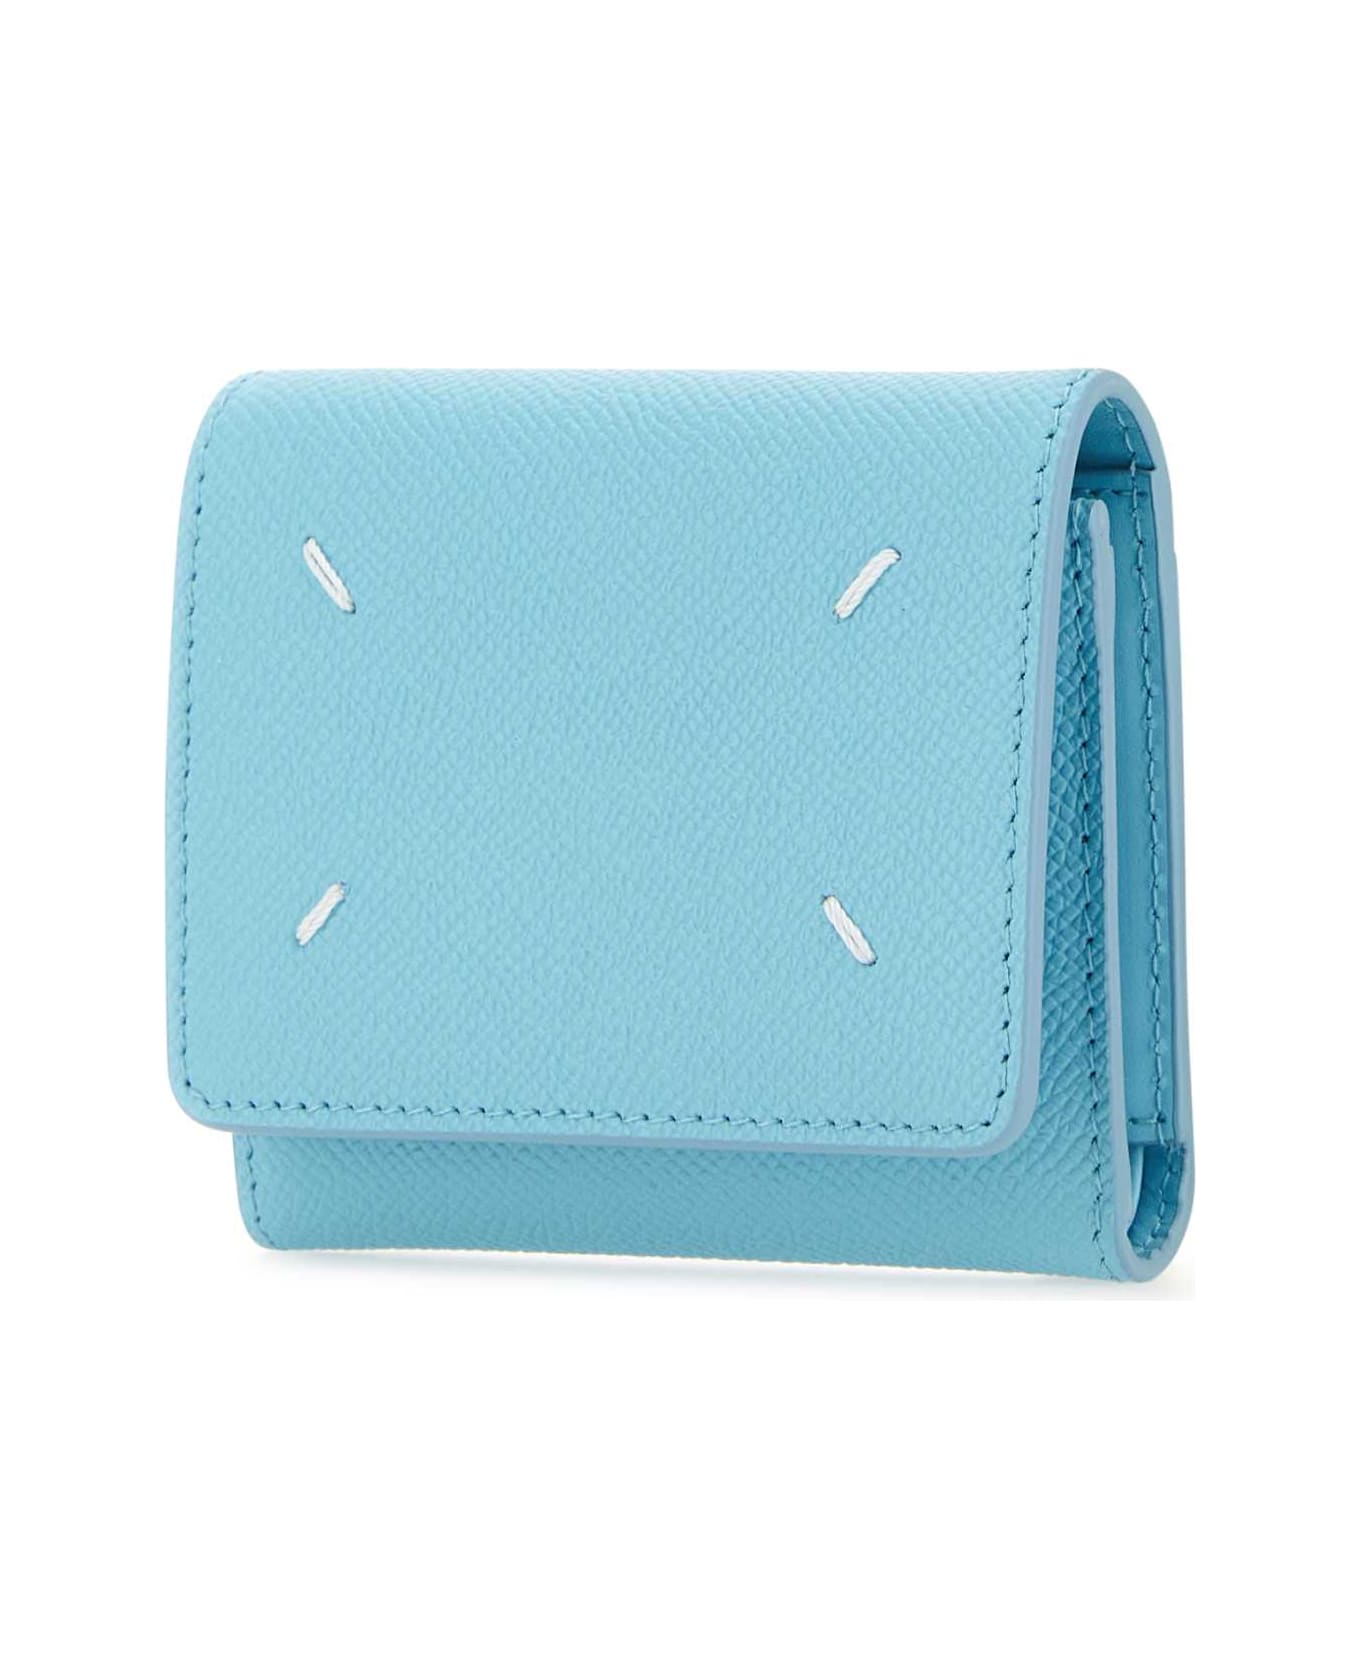 Maison Margiela Light-blue Leather Wallet - AQUA